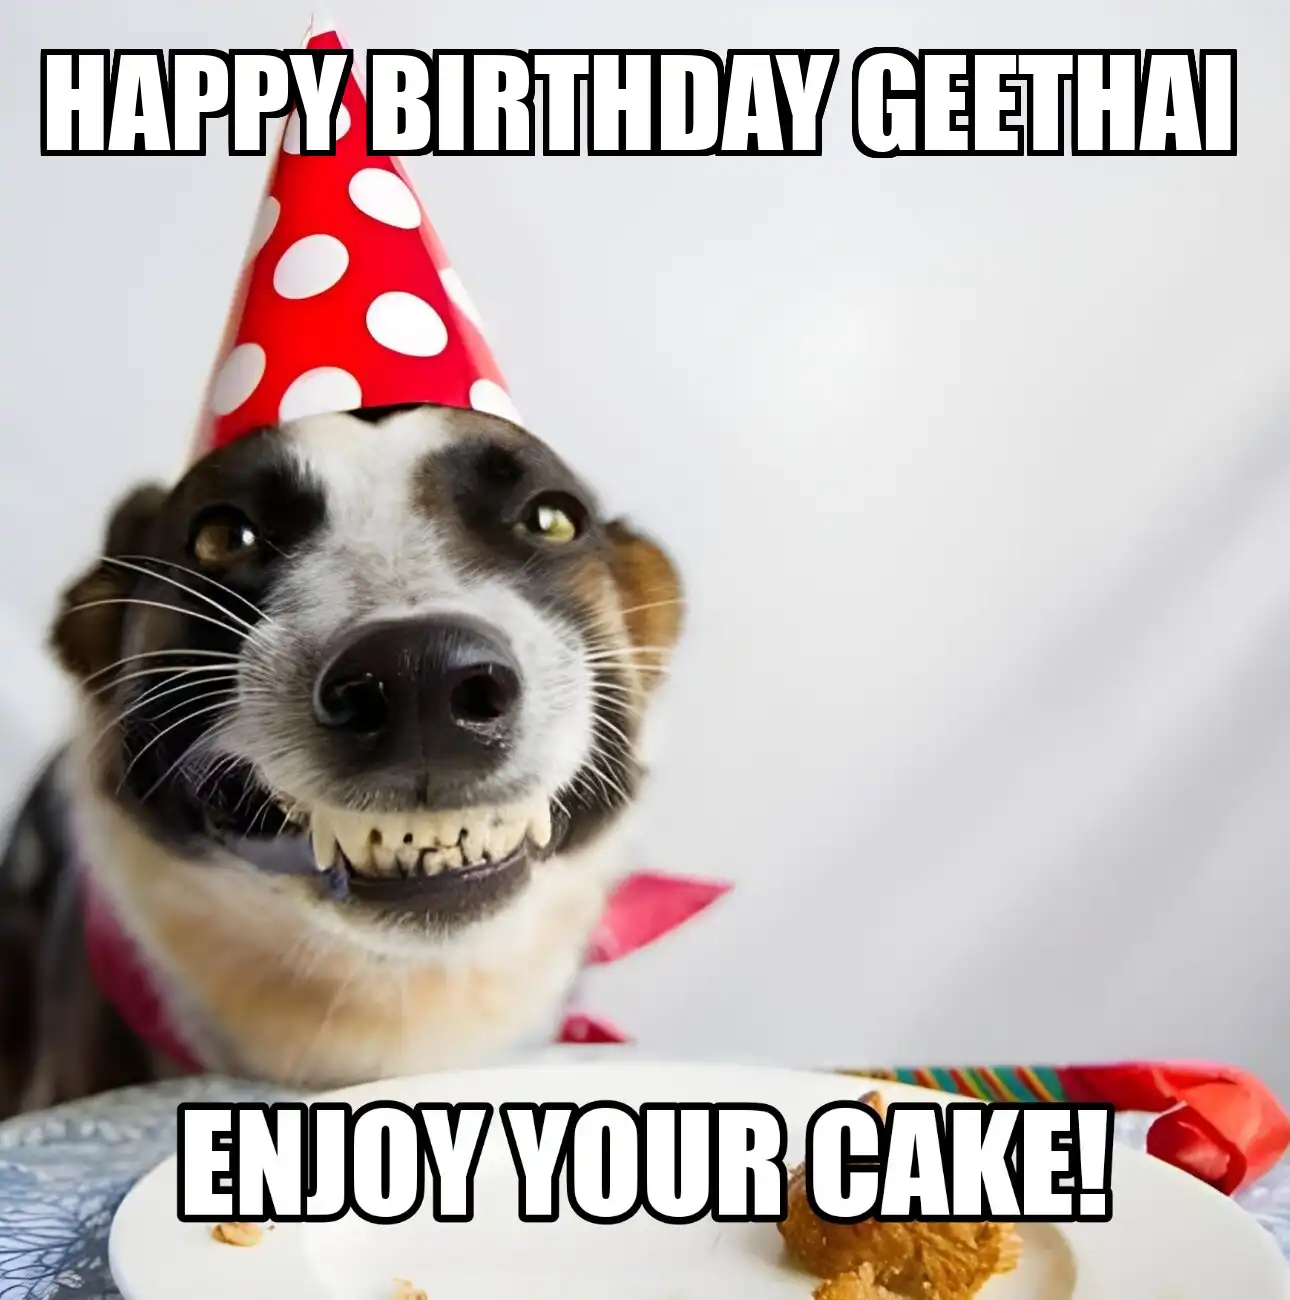 Happy Birthday Geethai Enjoy Your Cake Dog Meme